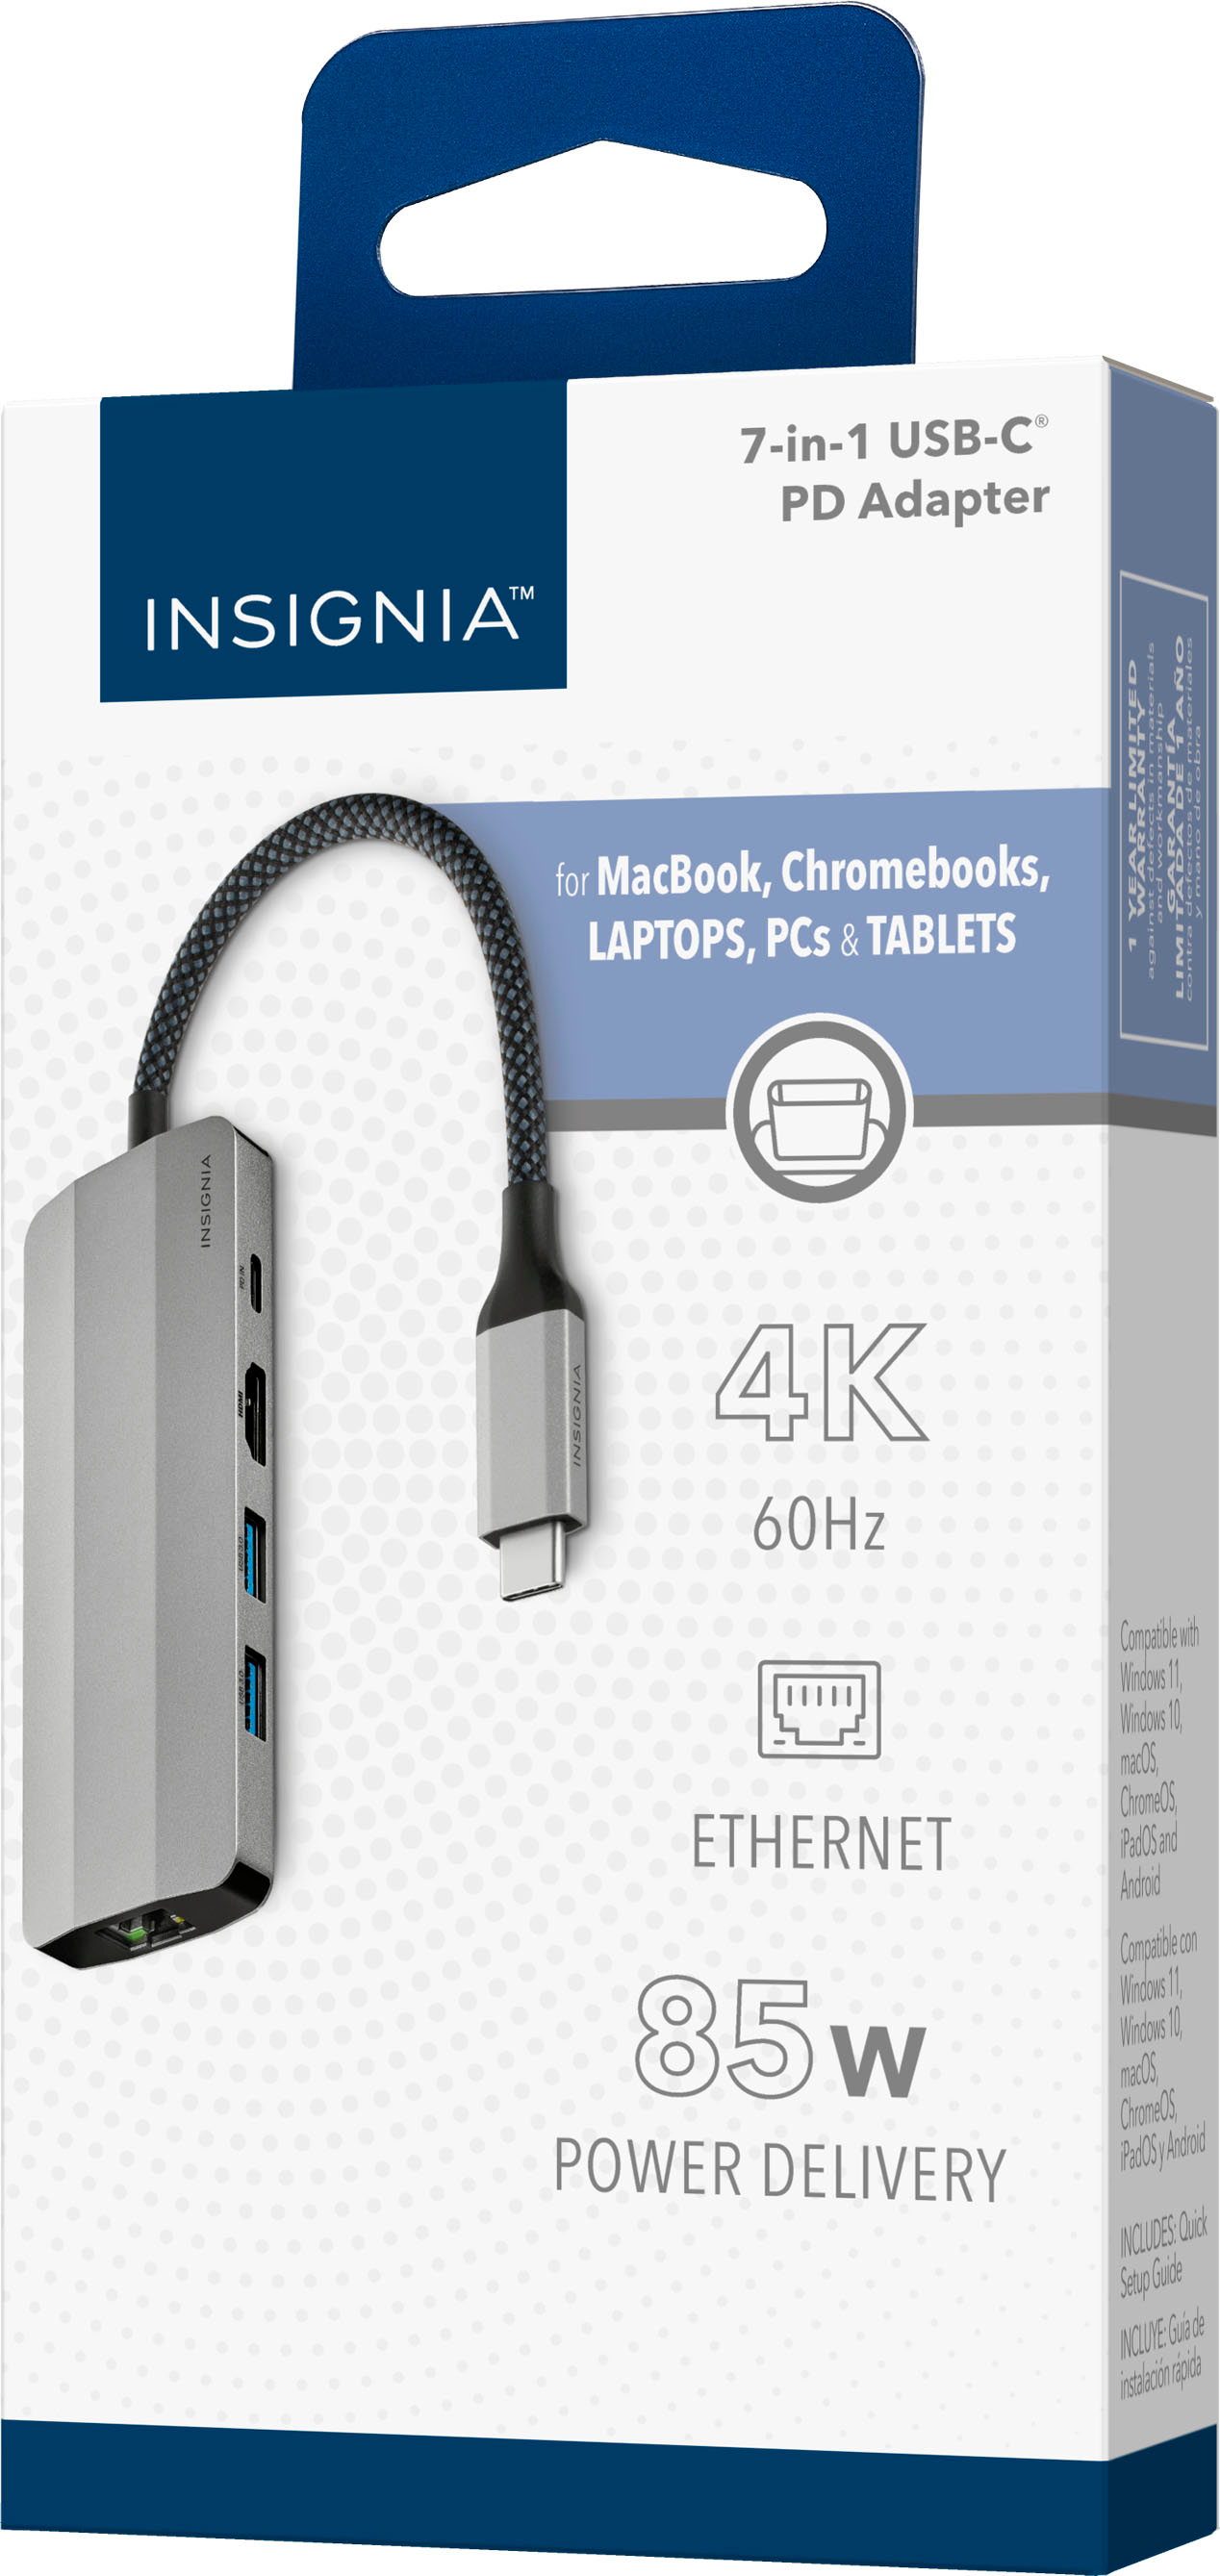 Best Buy: Insignia™ 5-Port USB Hub for PlayStation 4 Black NS-GPS4USBH101